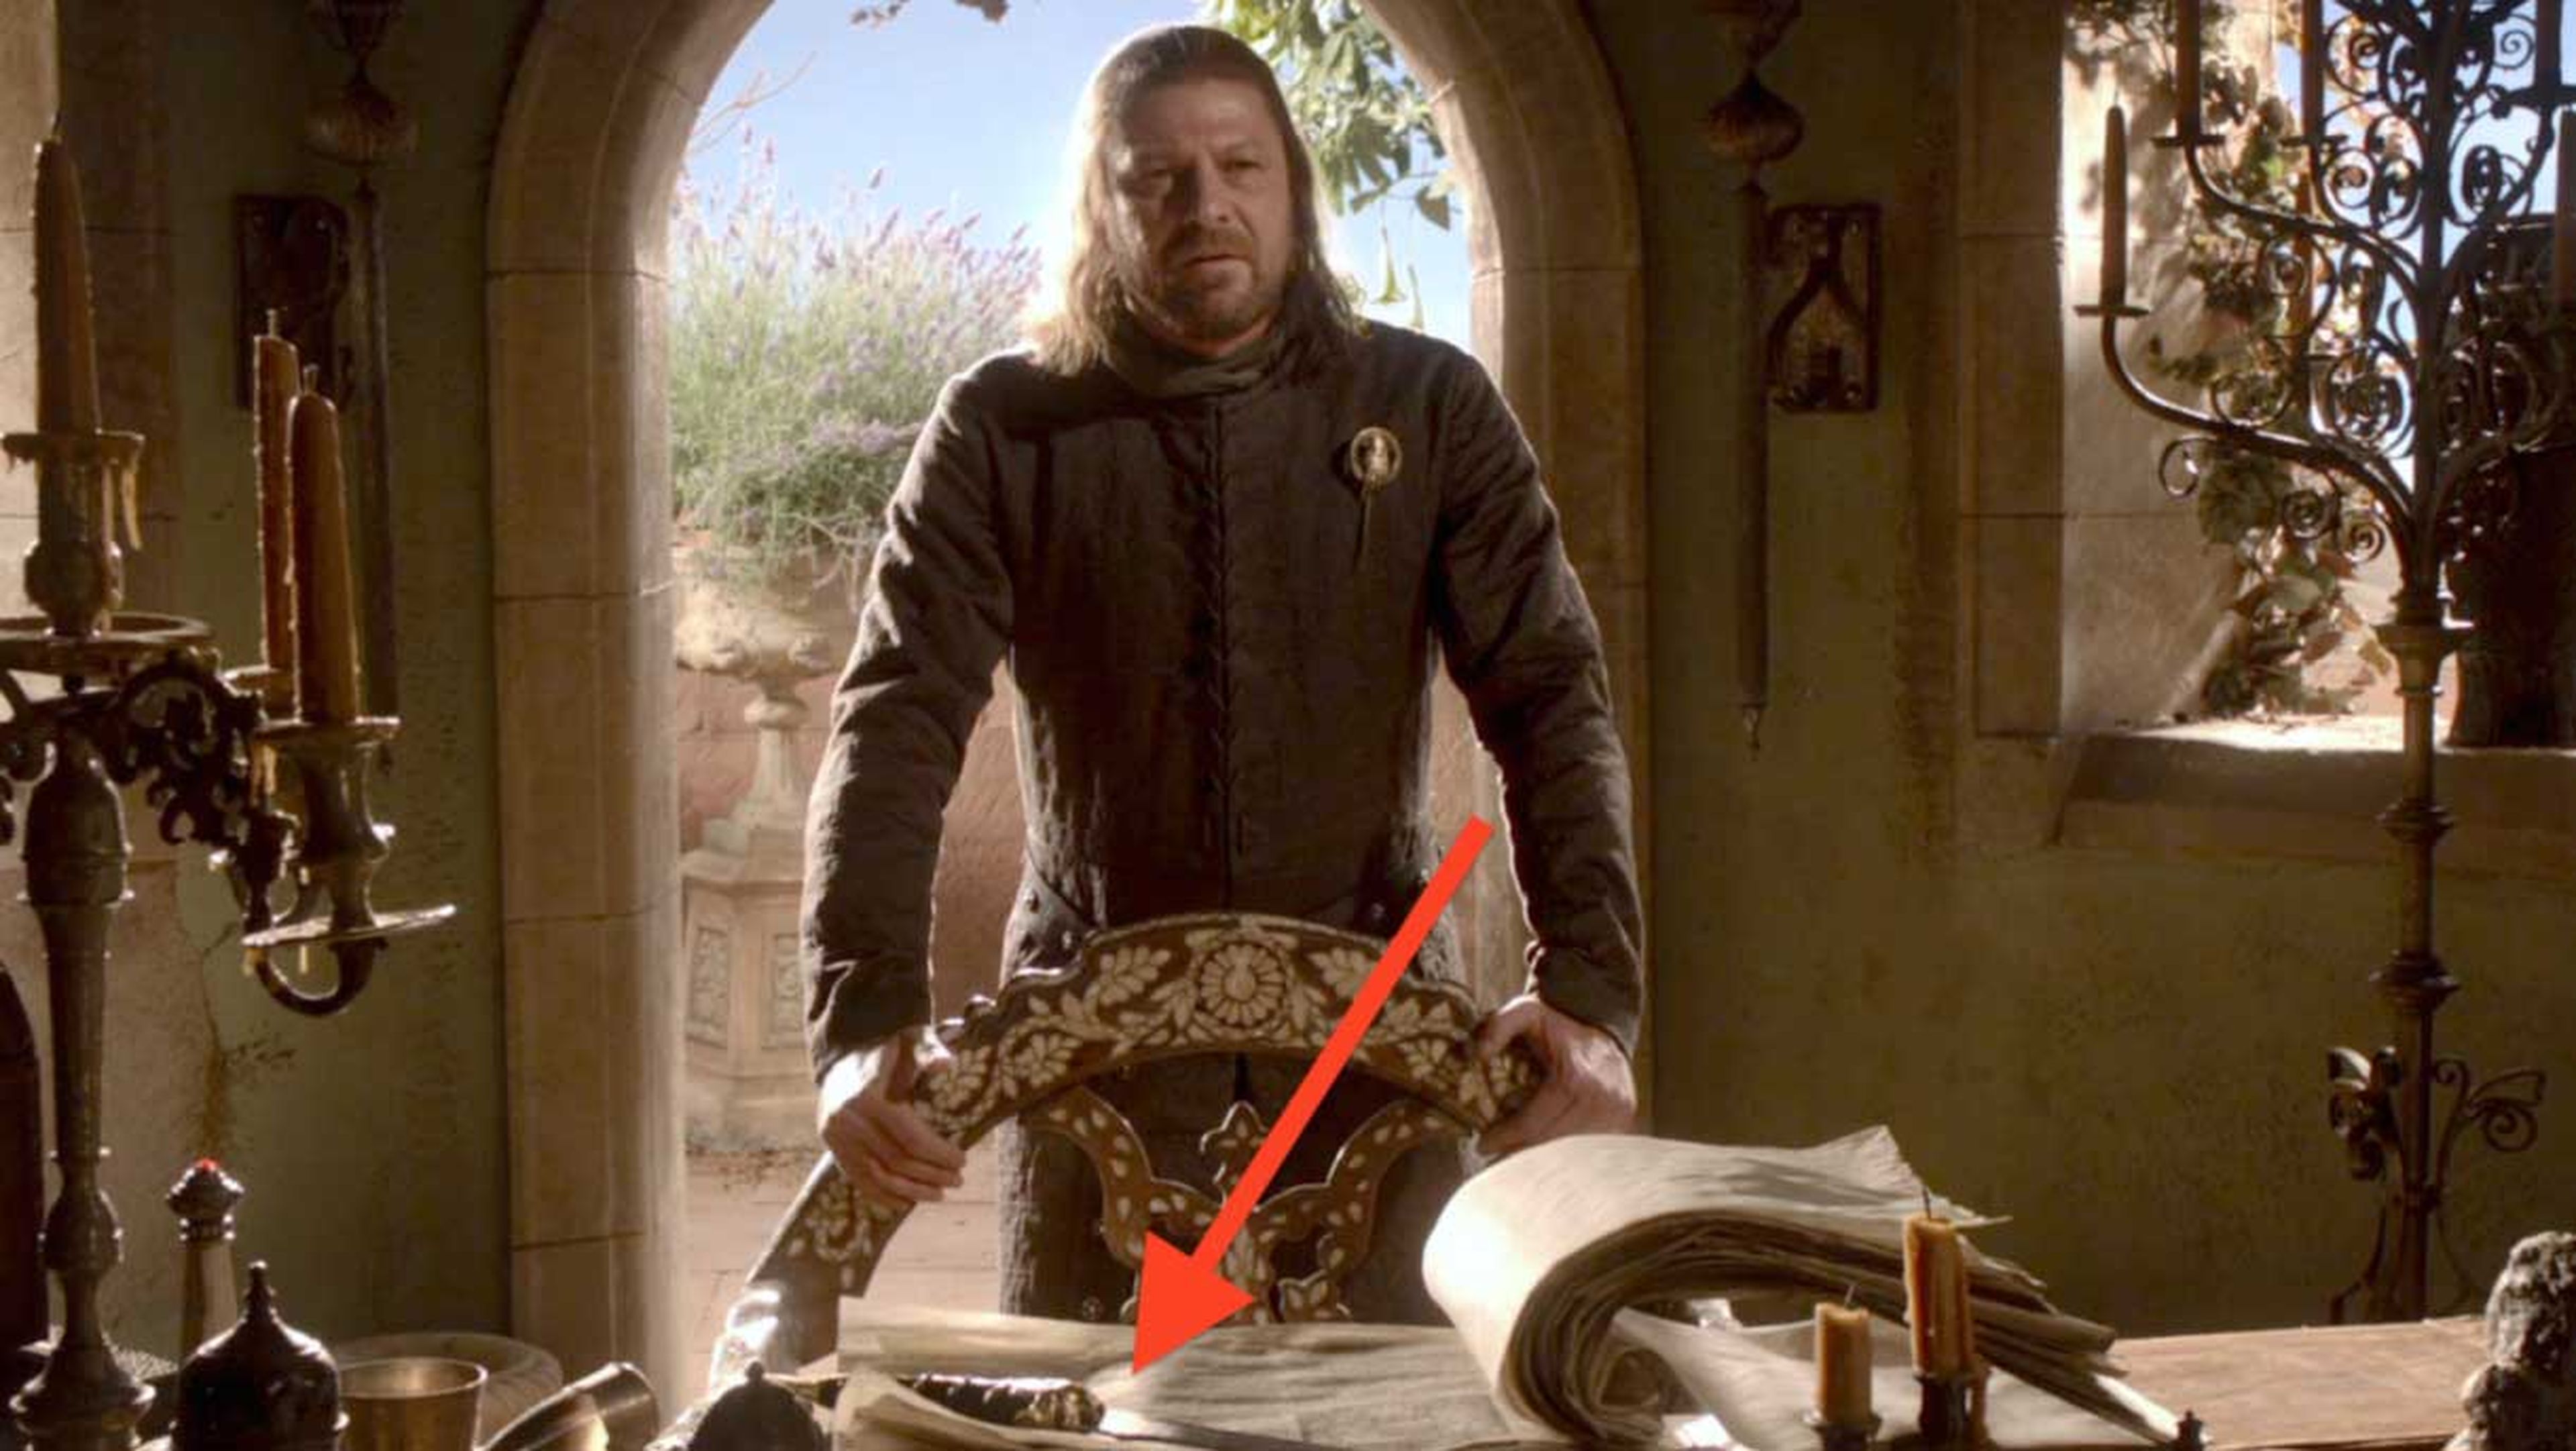 La daga de acero valyrio, en posesión de Ned Stark